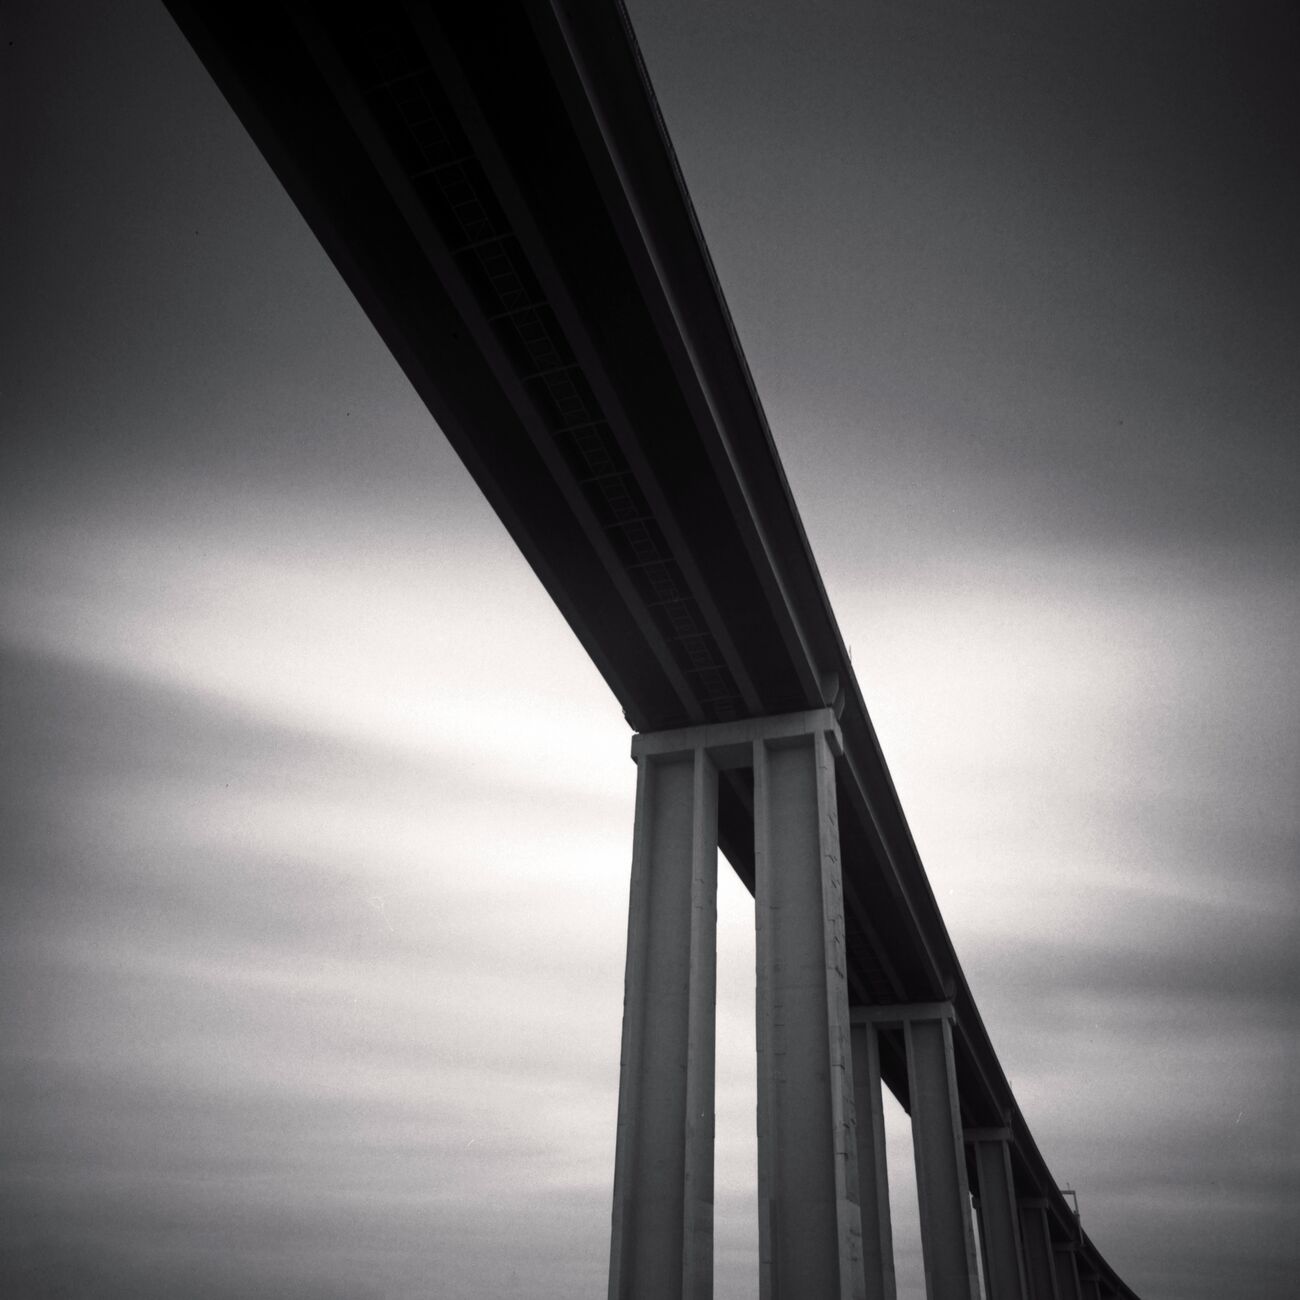 Saint-Nazaire Bridge, Study 3, Trignac, France. February 2021. Ref-11475 - Denis Olivier Photography